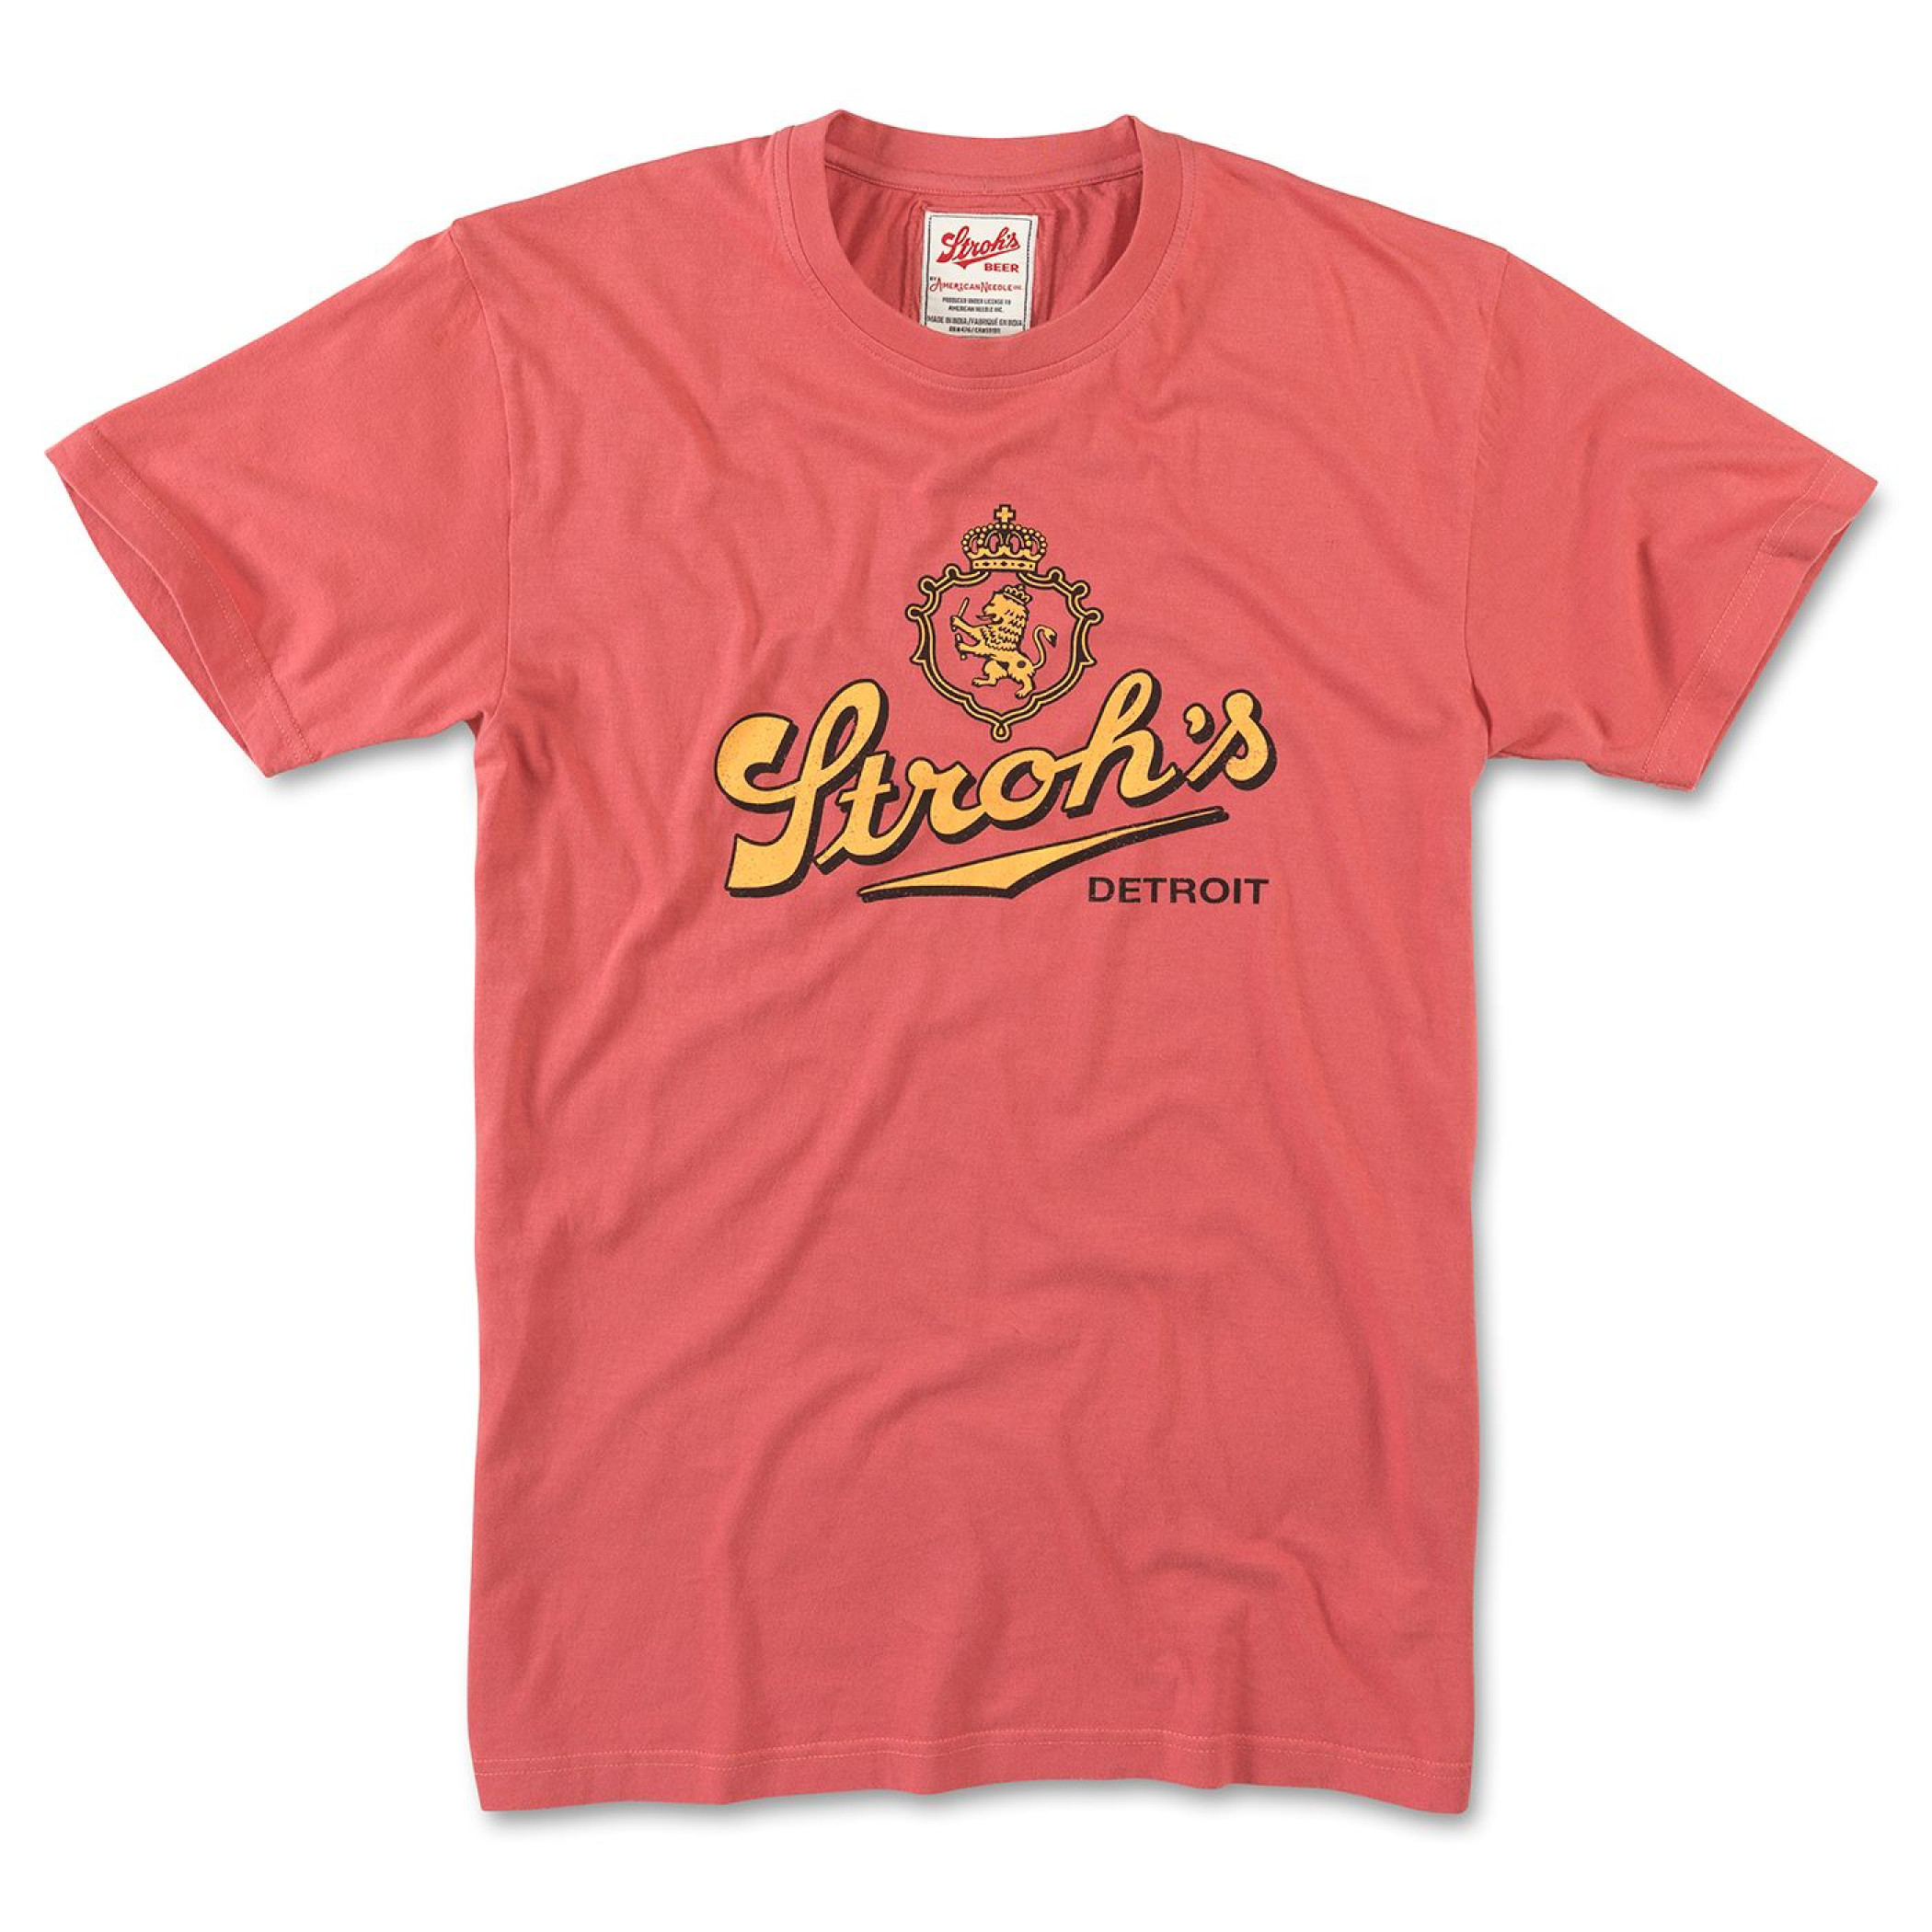 Stroh's Beer Detroit Retro Logo w/ Crest Brass Tacks T-Shirt